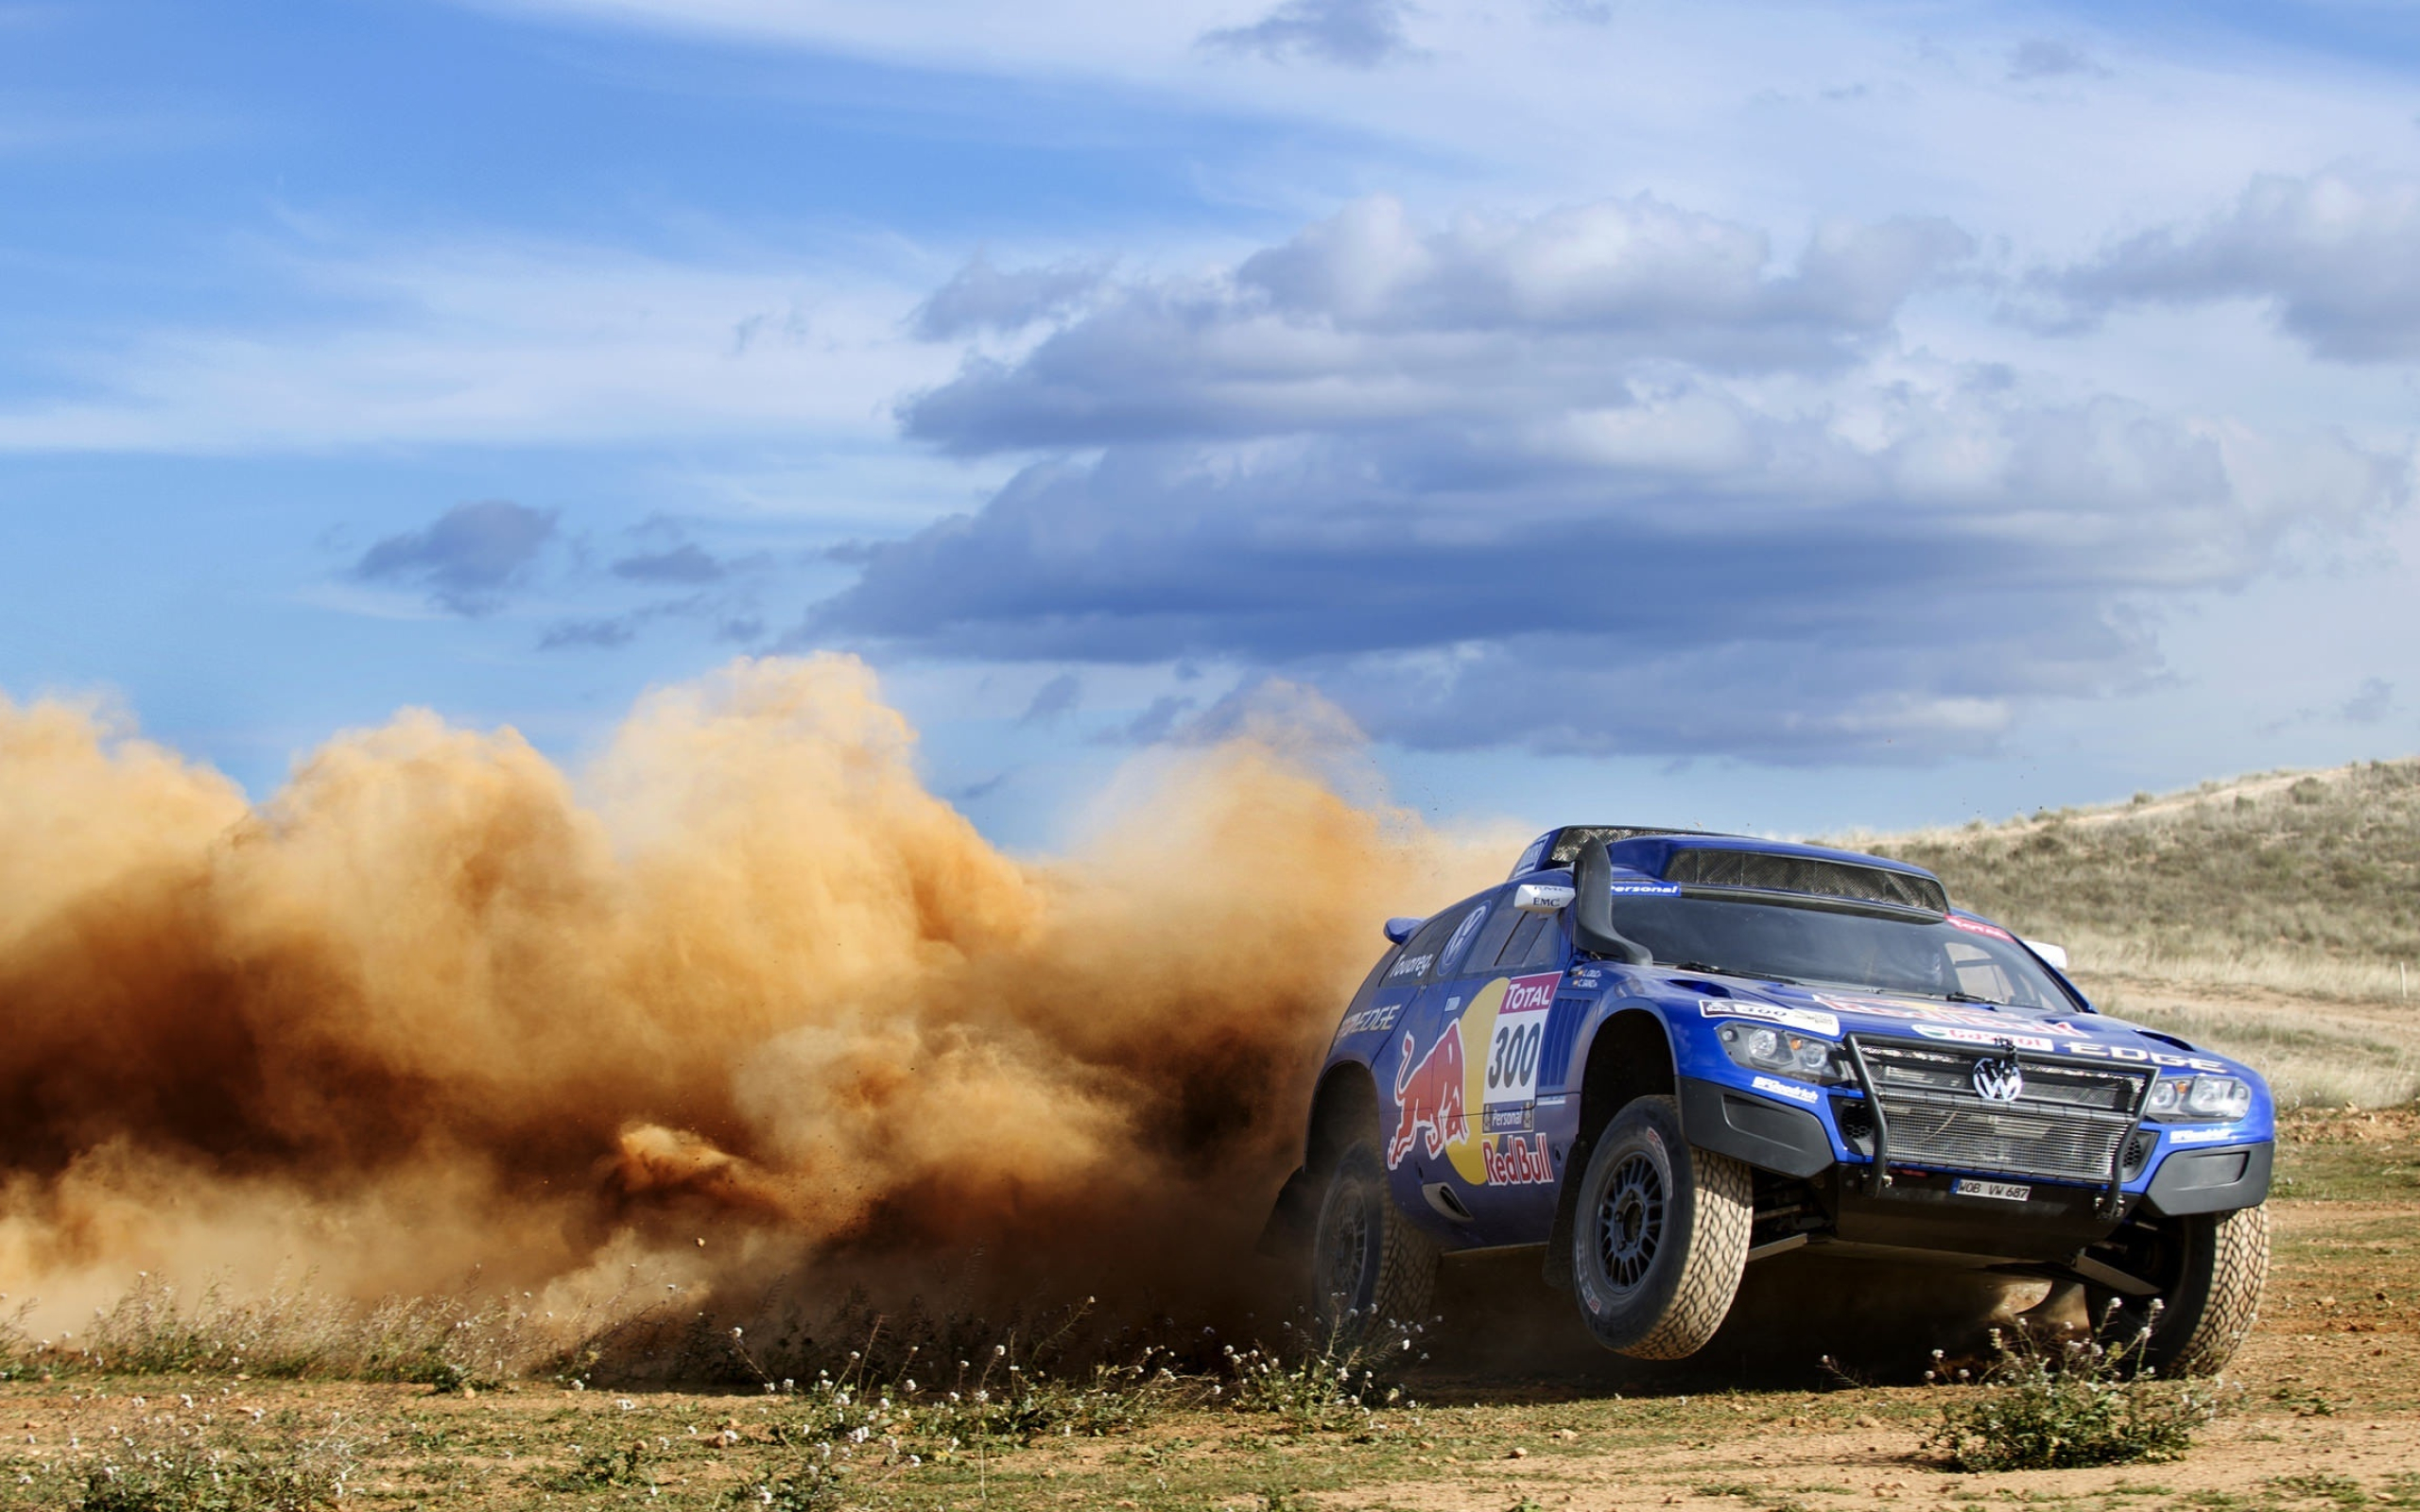 Rally ultra HD wallpaper, Widescreen excitement, Motorsport beauty, Eye-catching imagery, 2560x1600 HD Desktop